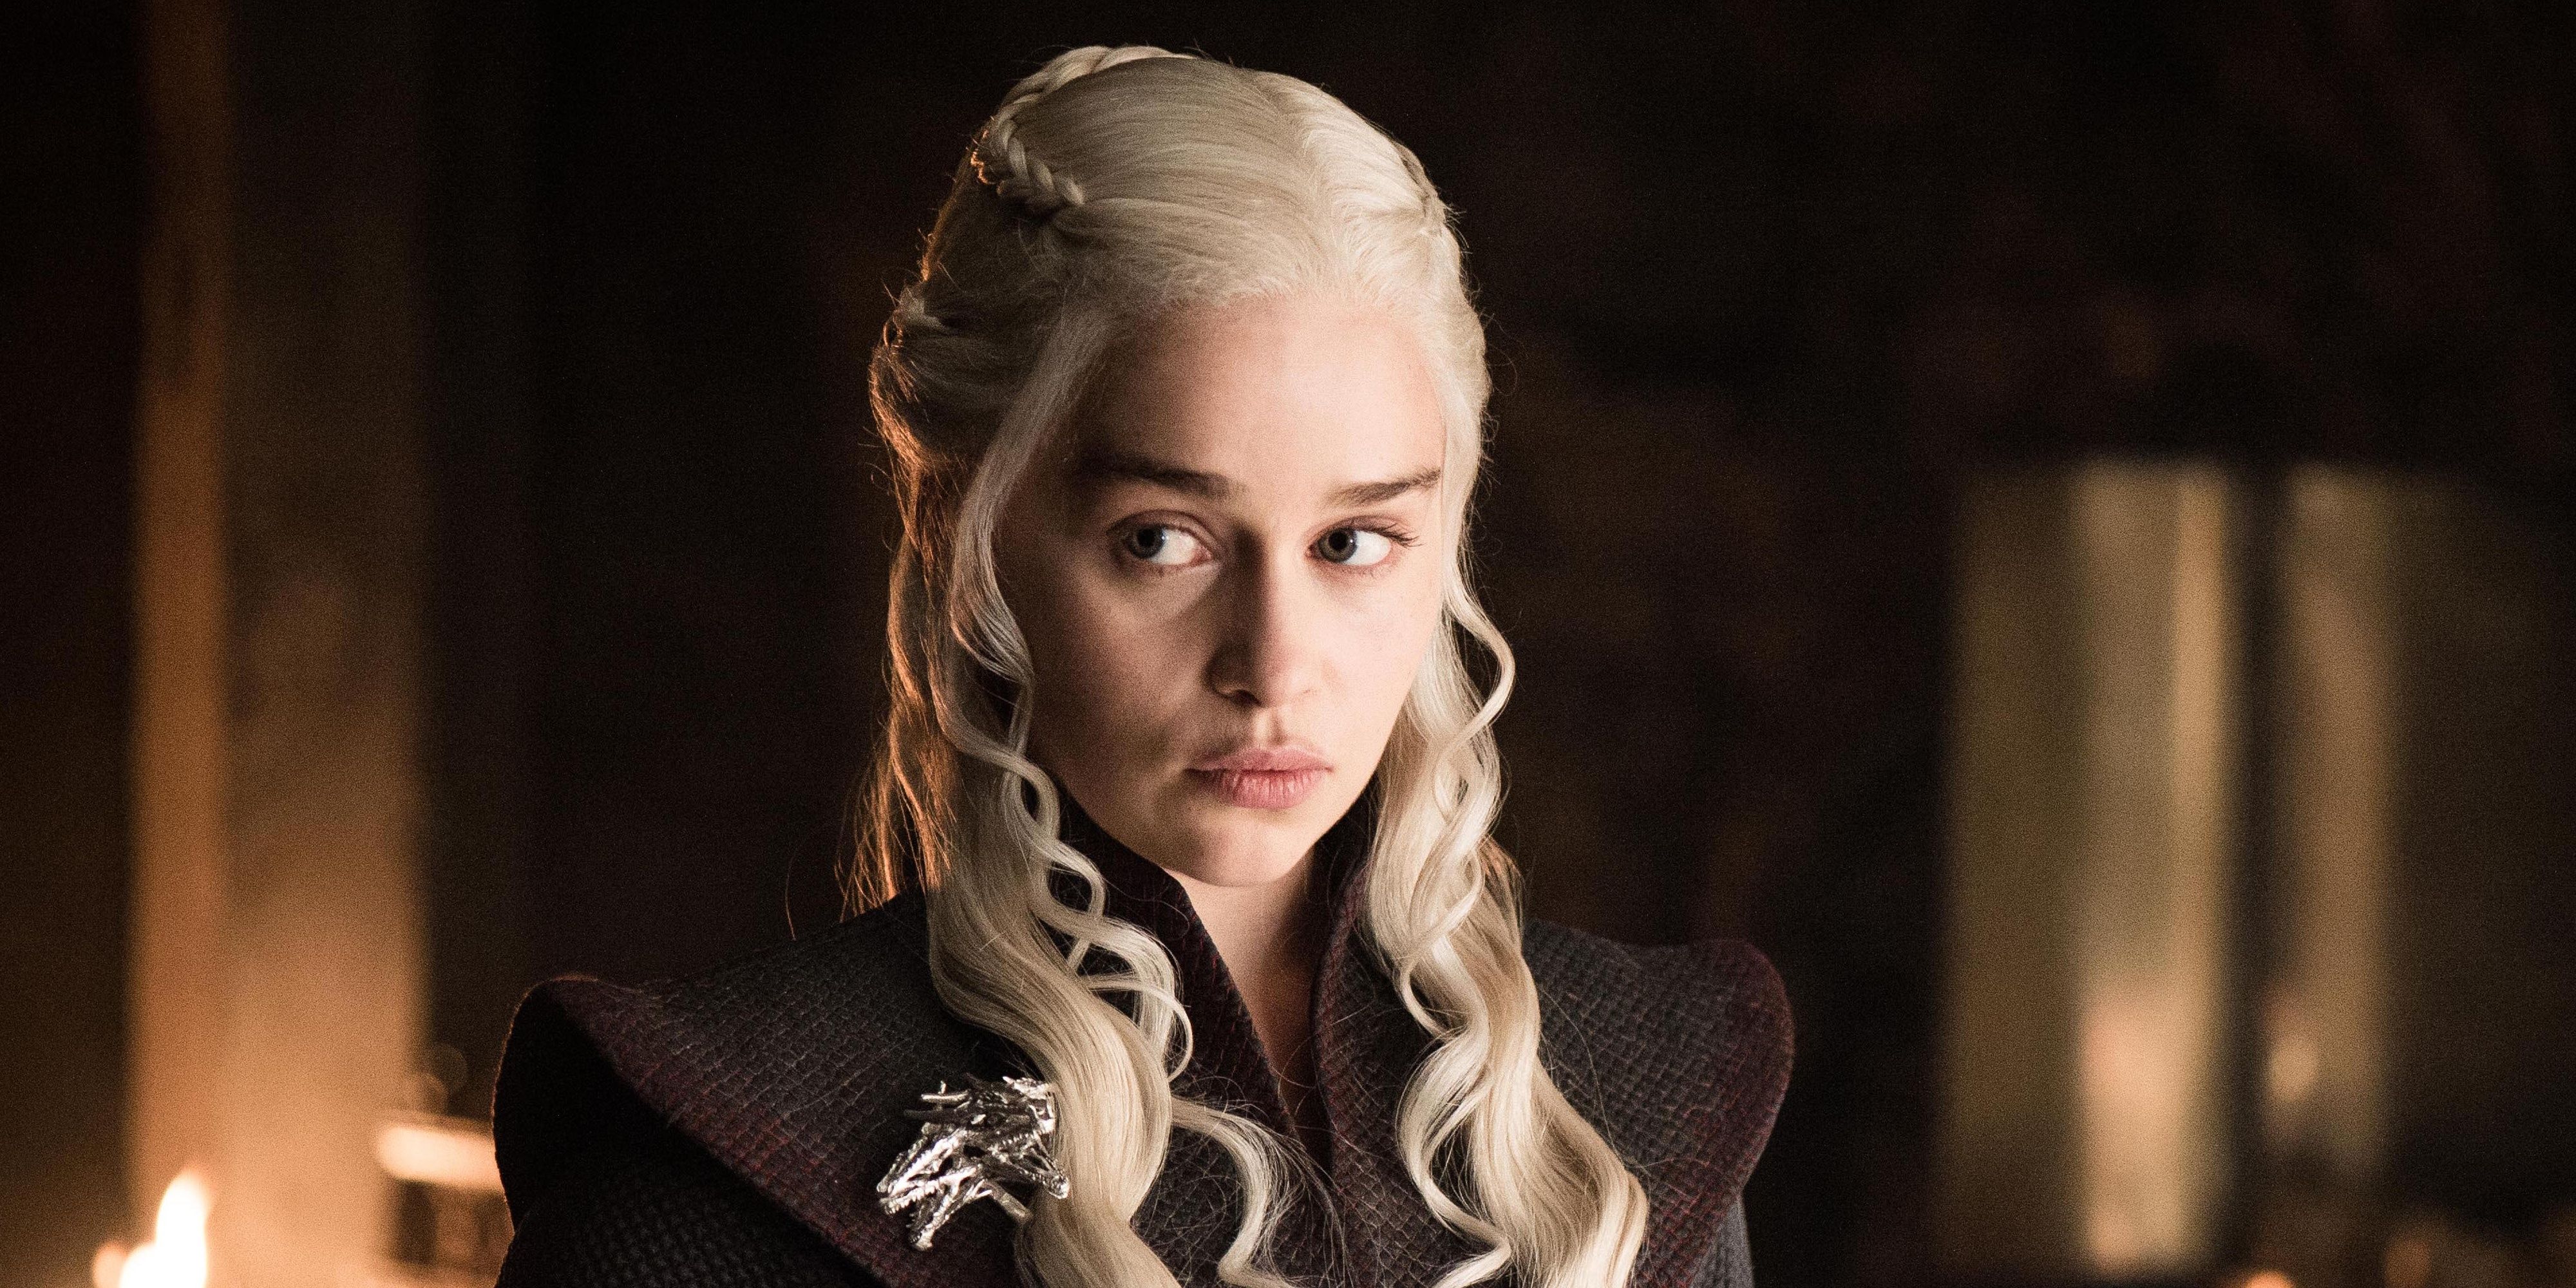 Daenerys giving side eye in Game of Thrones